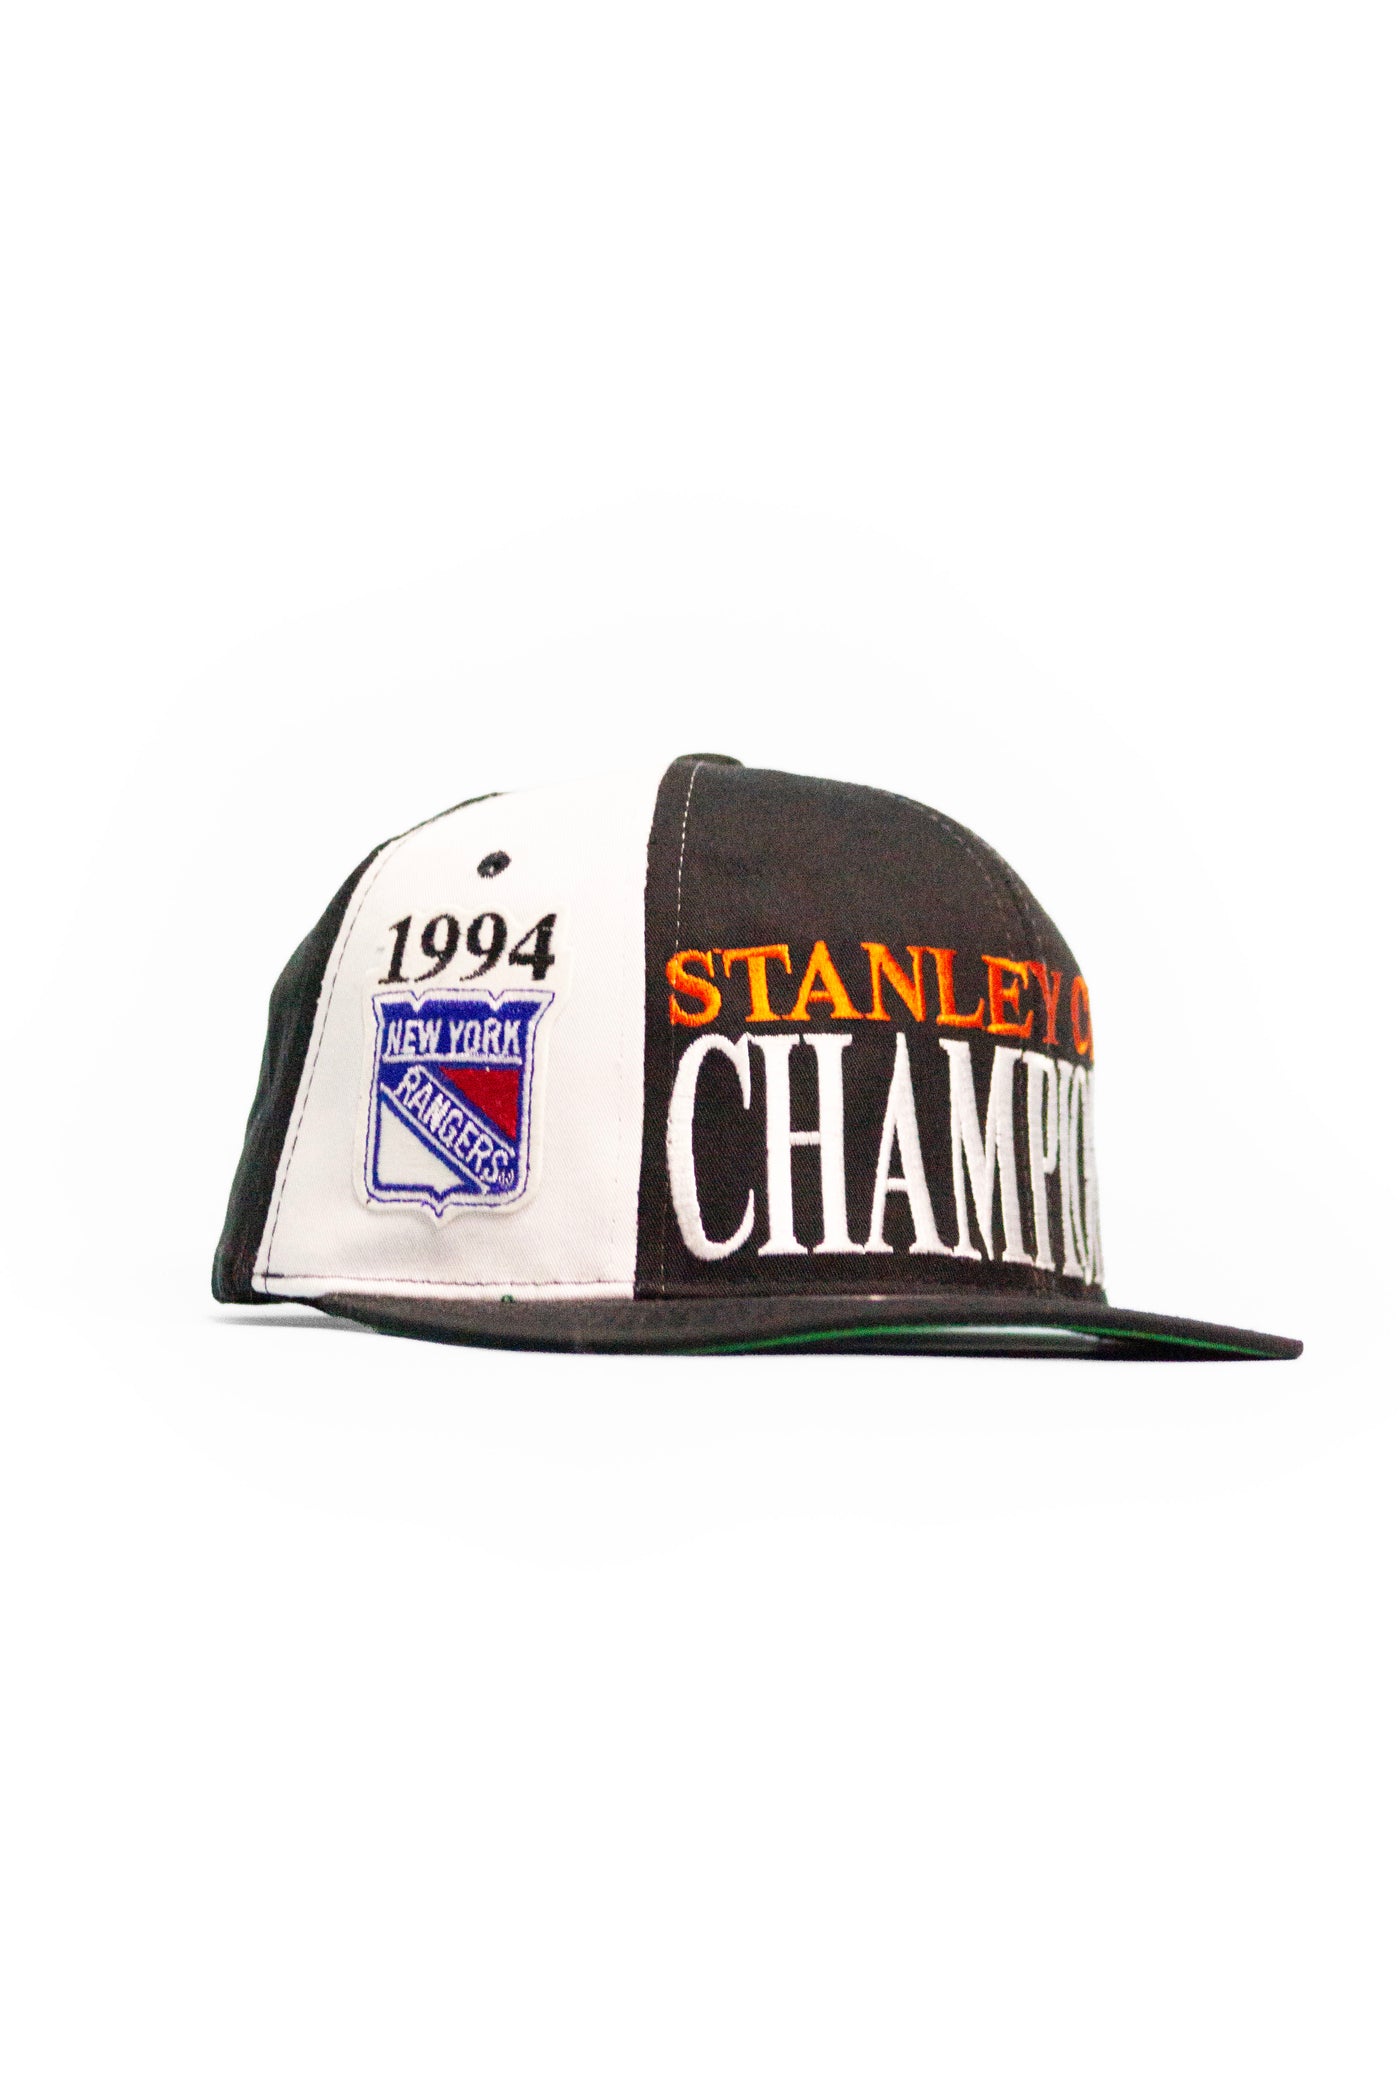 Vintage 1994 New York Rangers Stanley Cup Champions Snapback